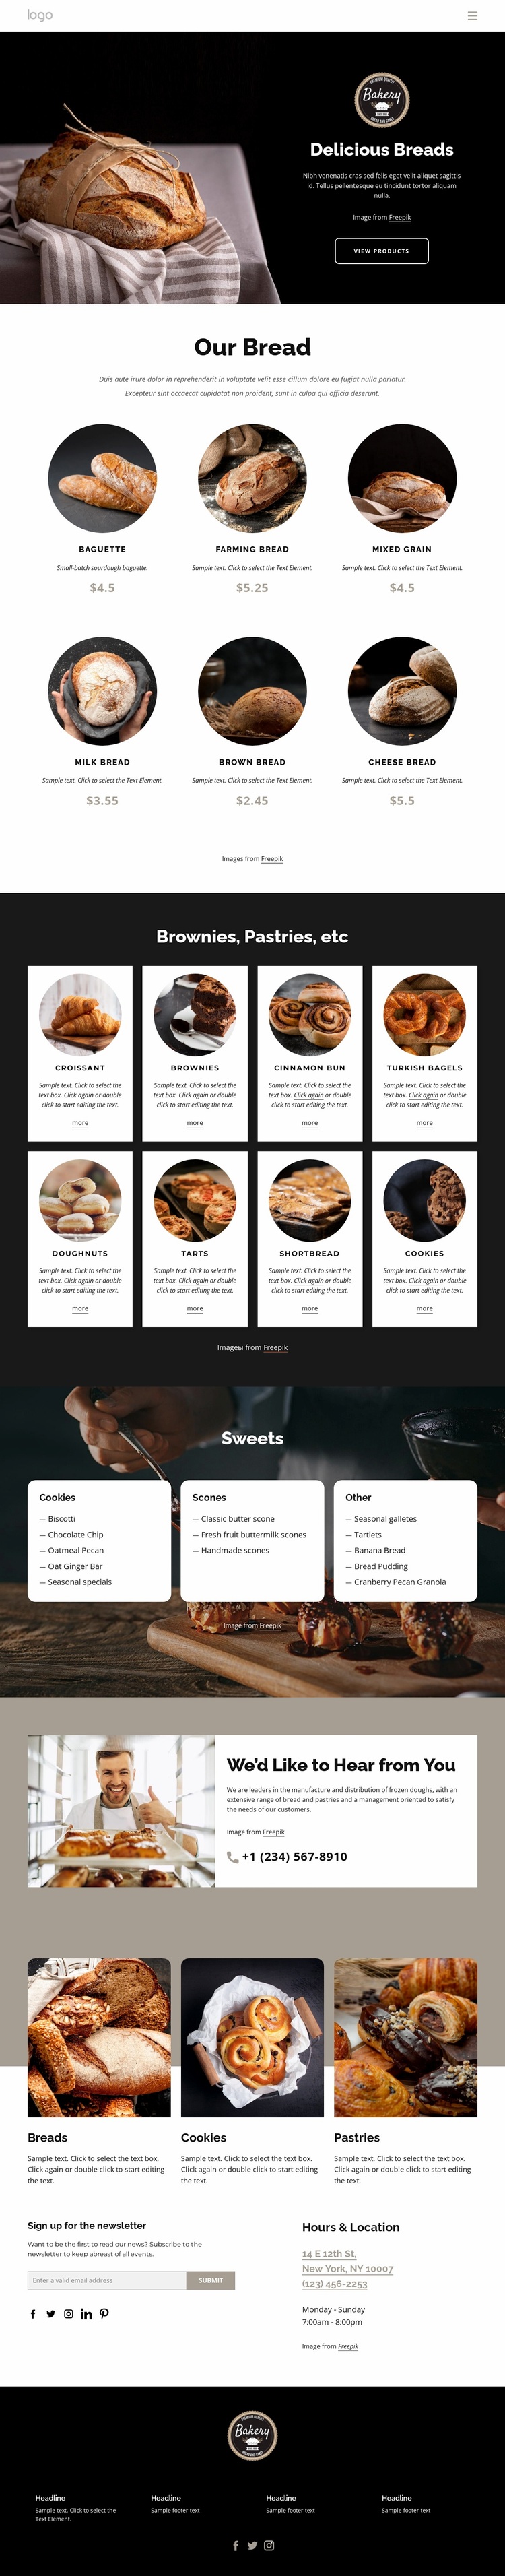 Delicious breads Website Design